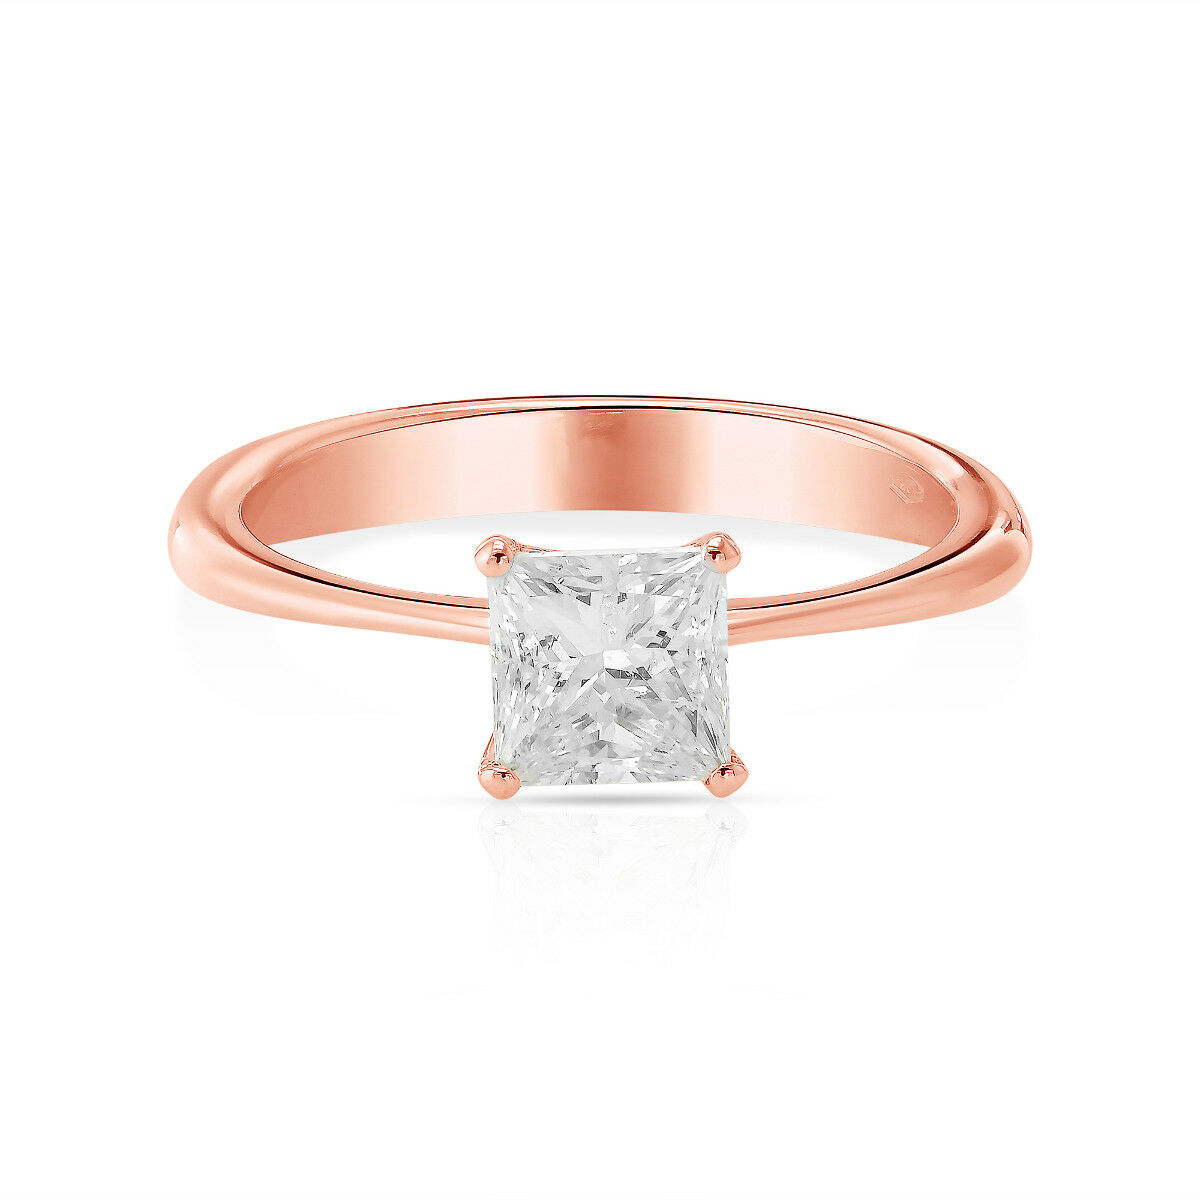 1 Carat Princess Cut E Vs2 Diamond Solitaire Engagement Ring 14k Rose Gold